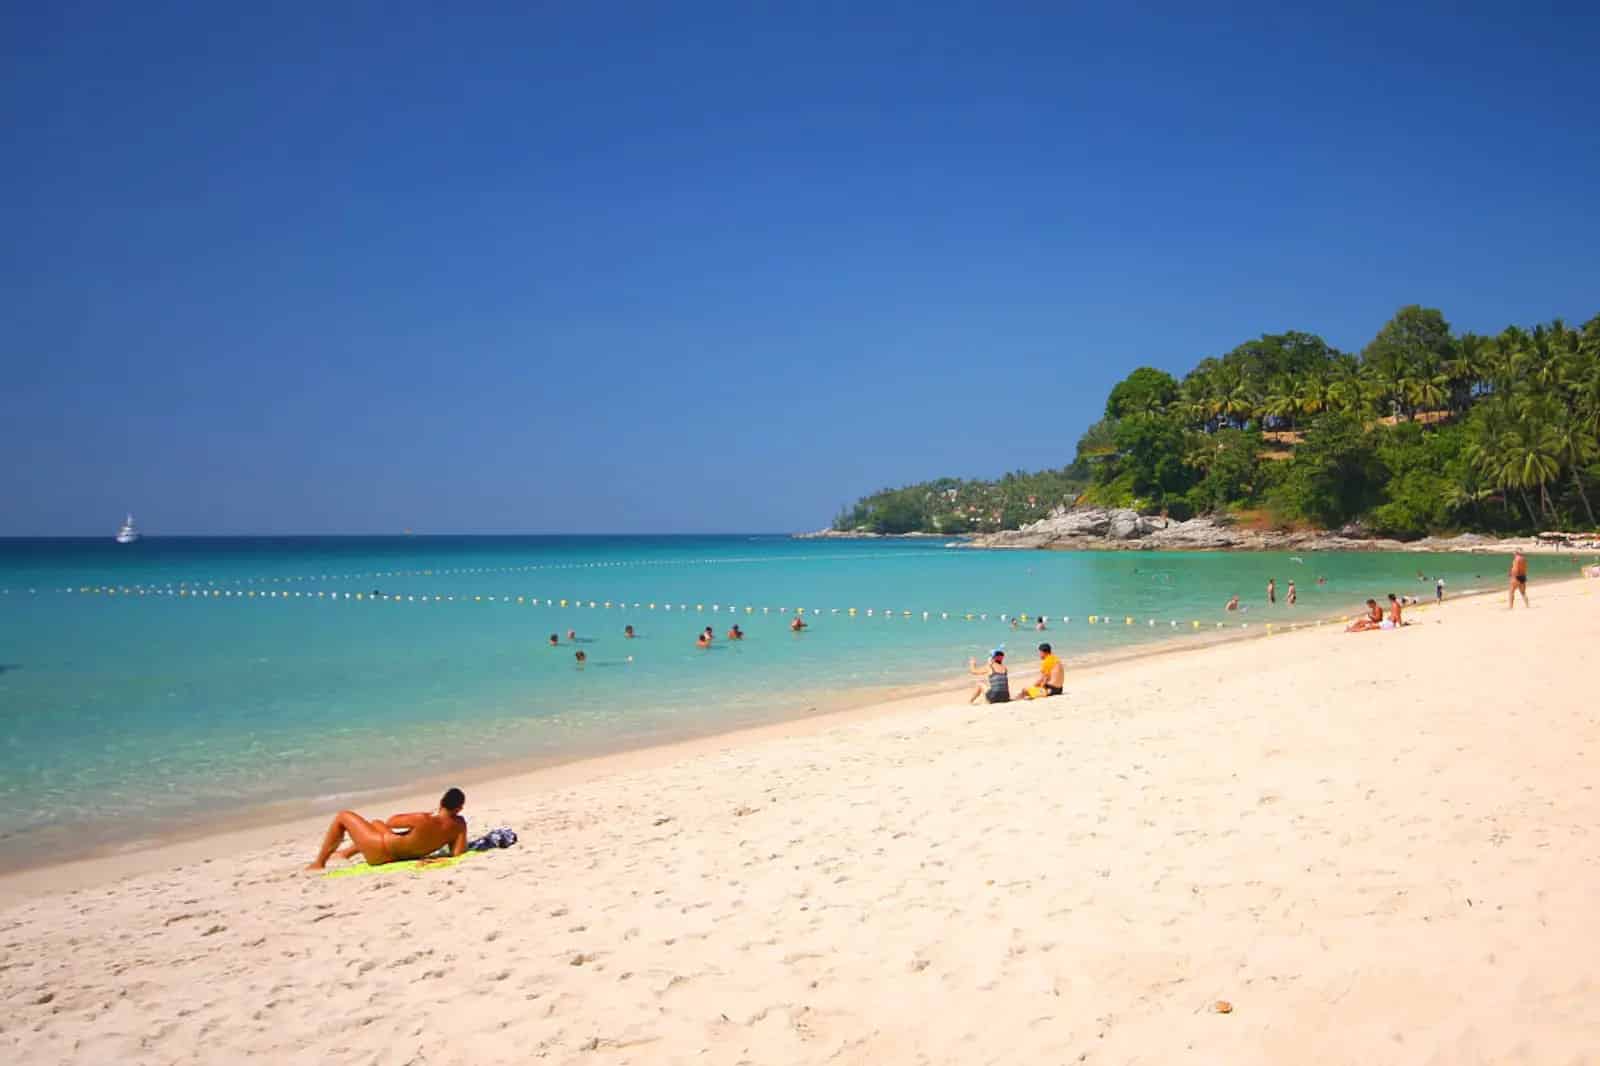 The Surin Beach in Phuket